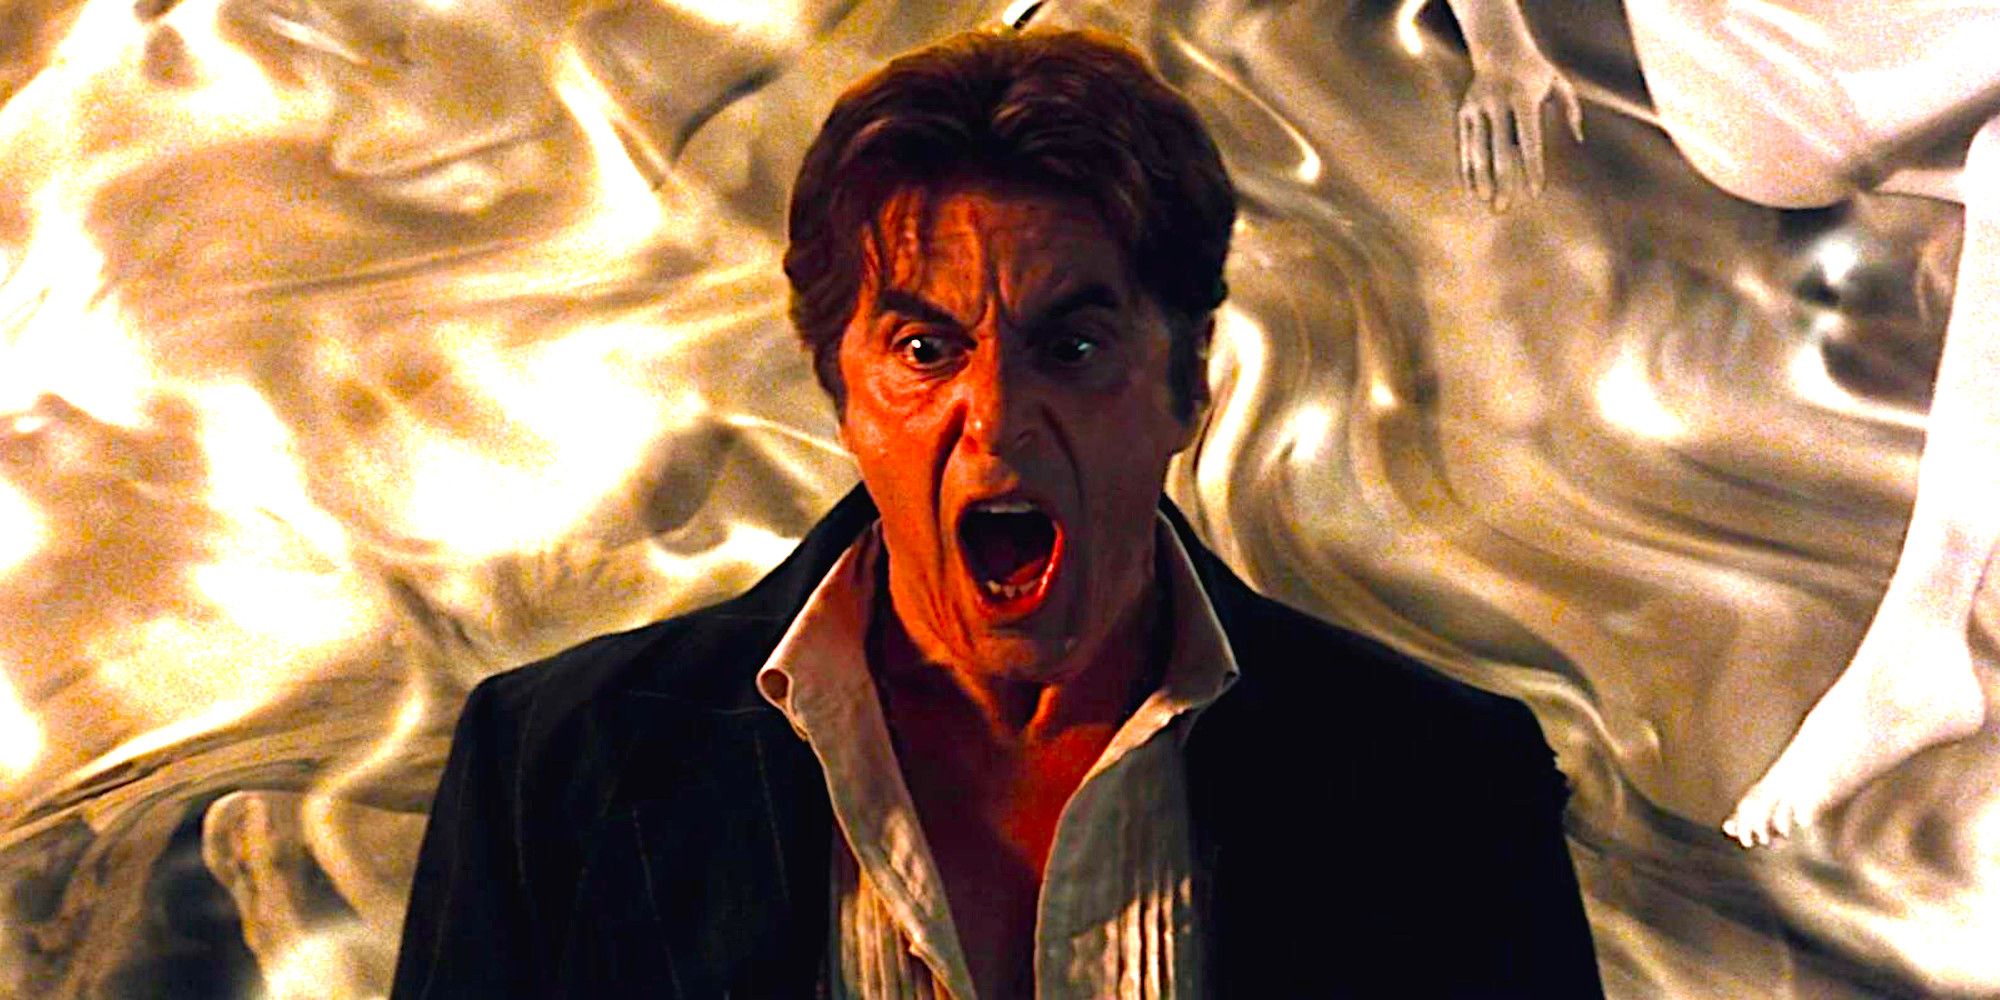 Al Pacino Cast As Real-Life Mafia Boss In New Thriller